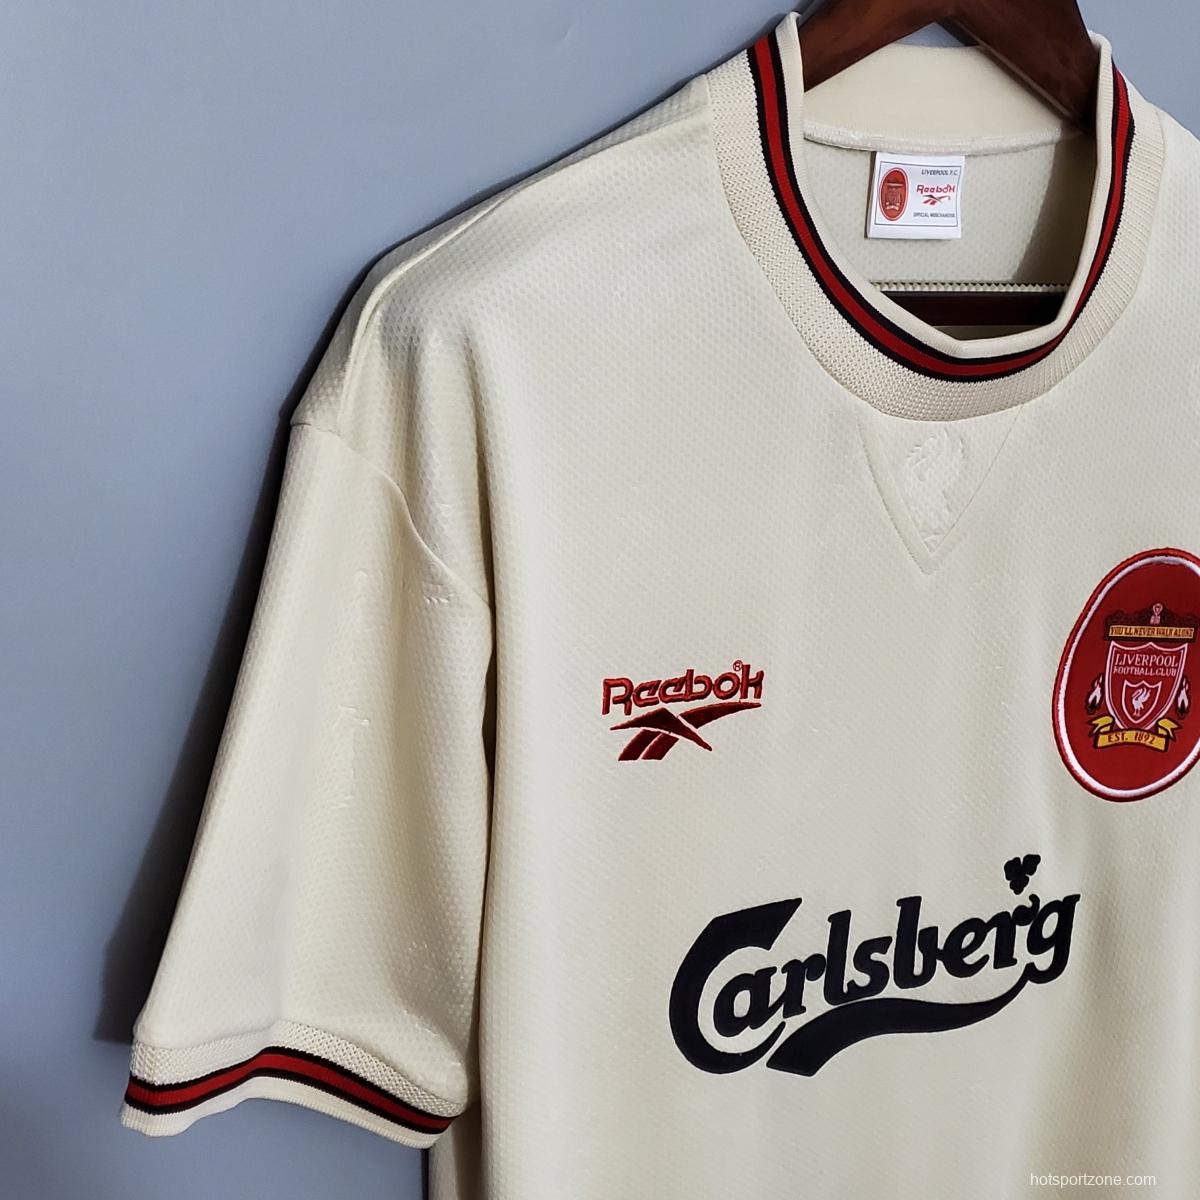 Retro 96/97 Liverpool away Soccer Jersey